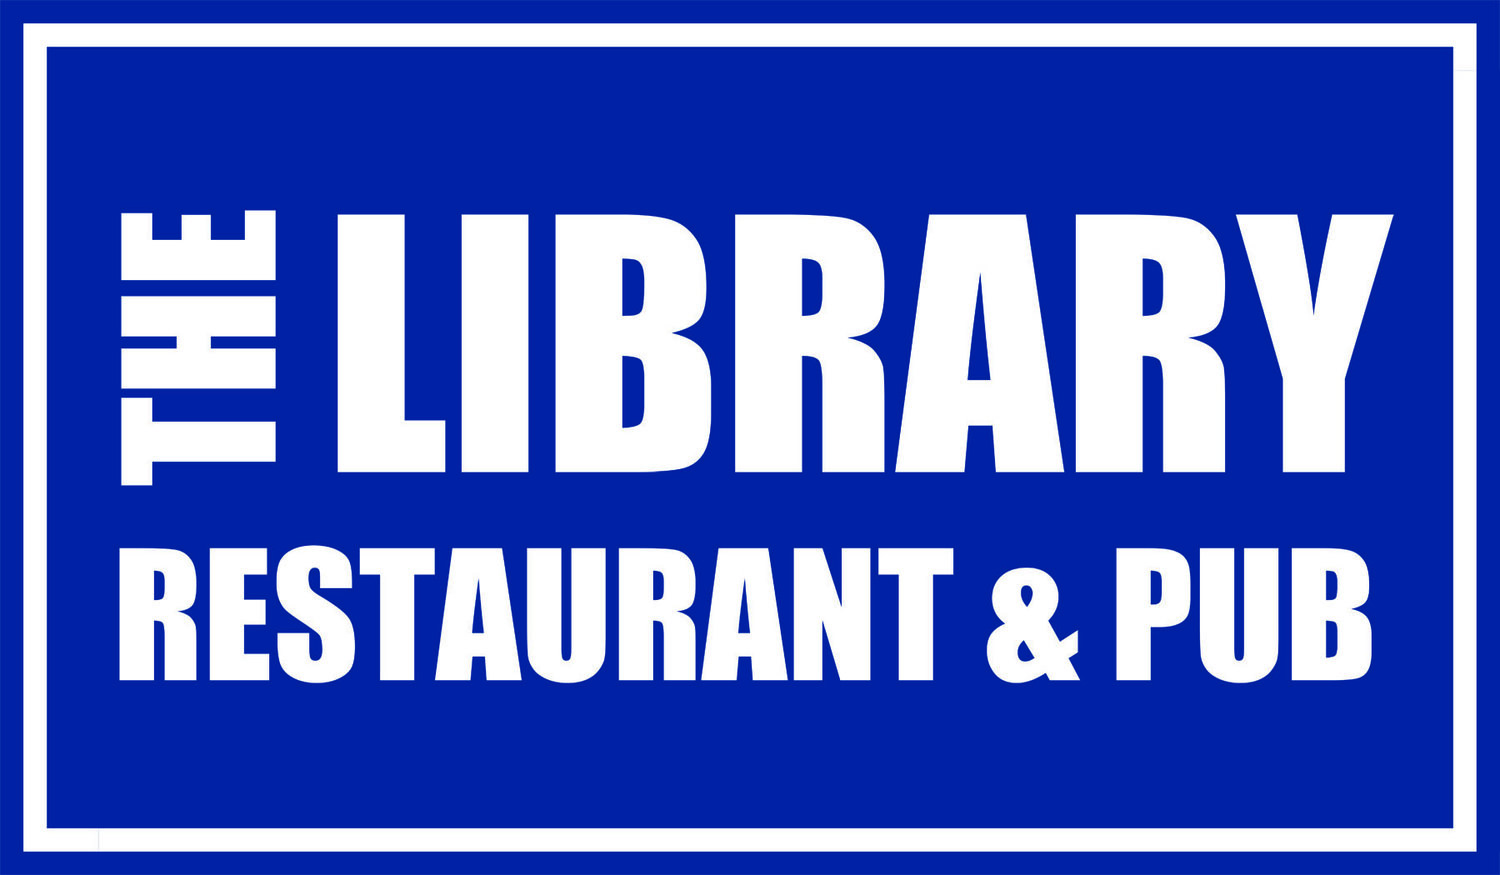 The Library Restaurant & Pub